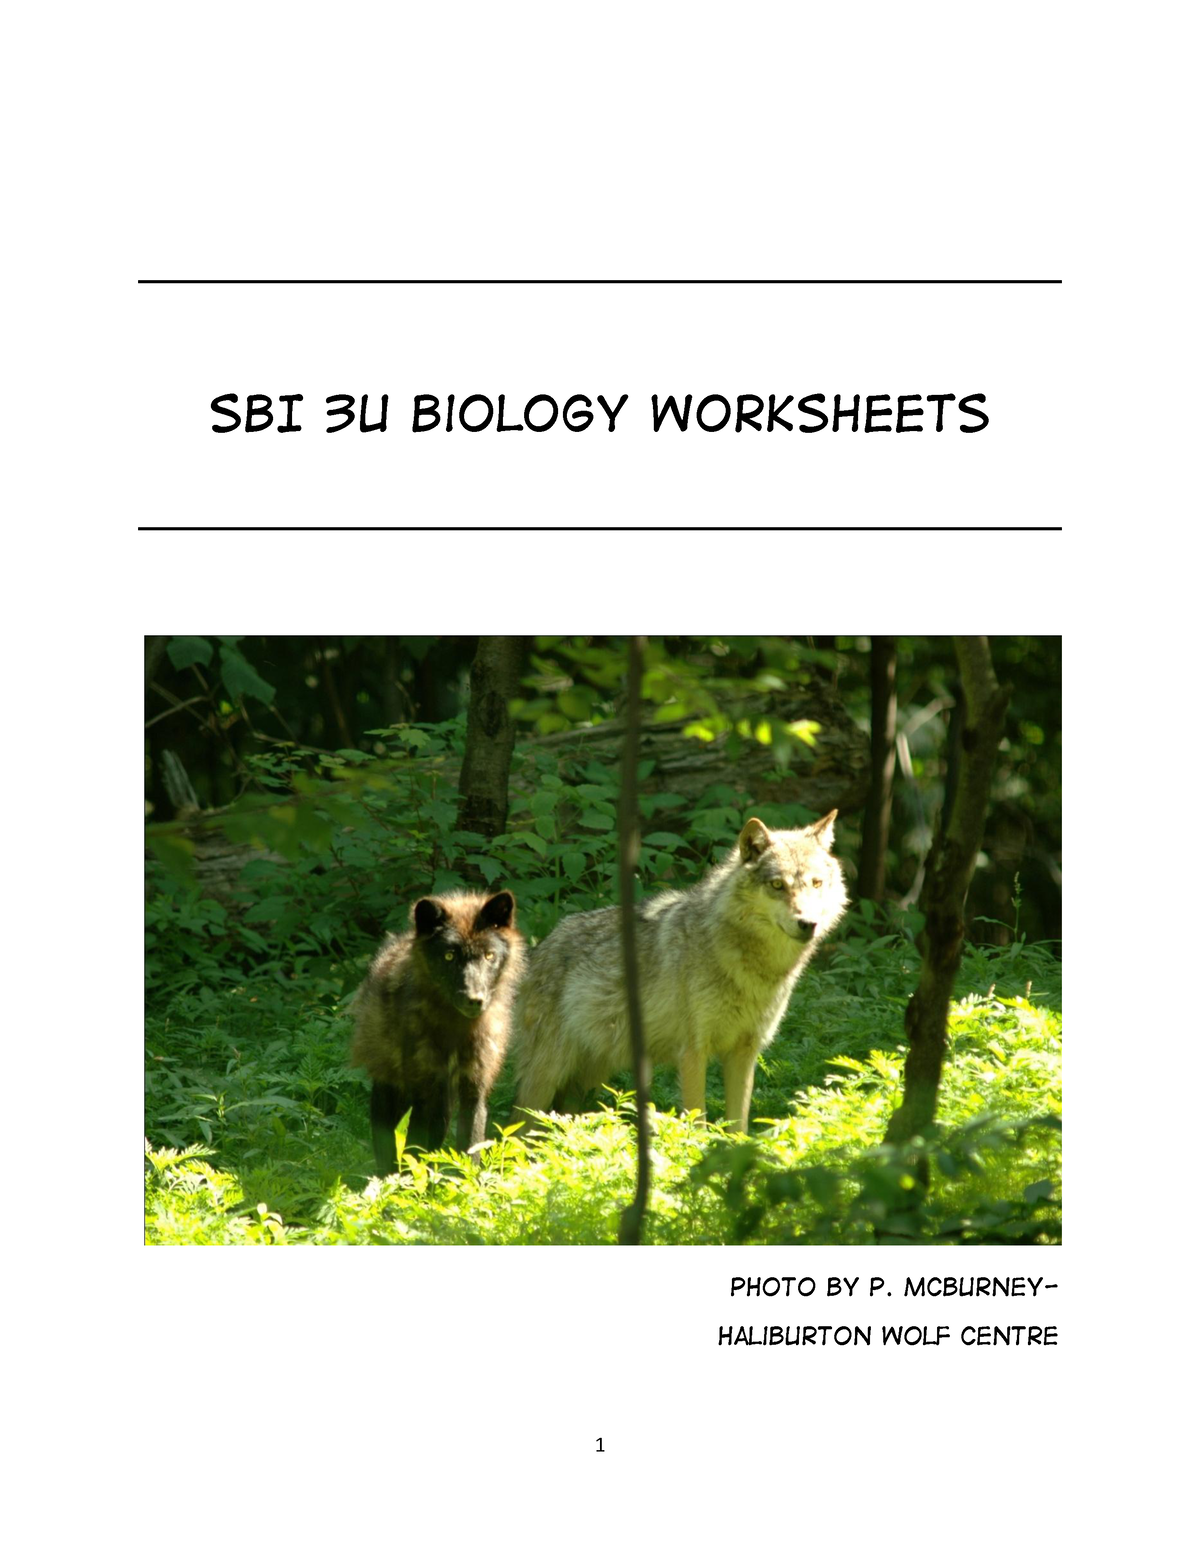 genetics-worksheet-sbi-3u-biology-worksheets-photo-by-p-mcburney-haliburton-wolf-centre